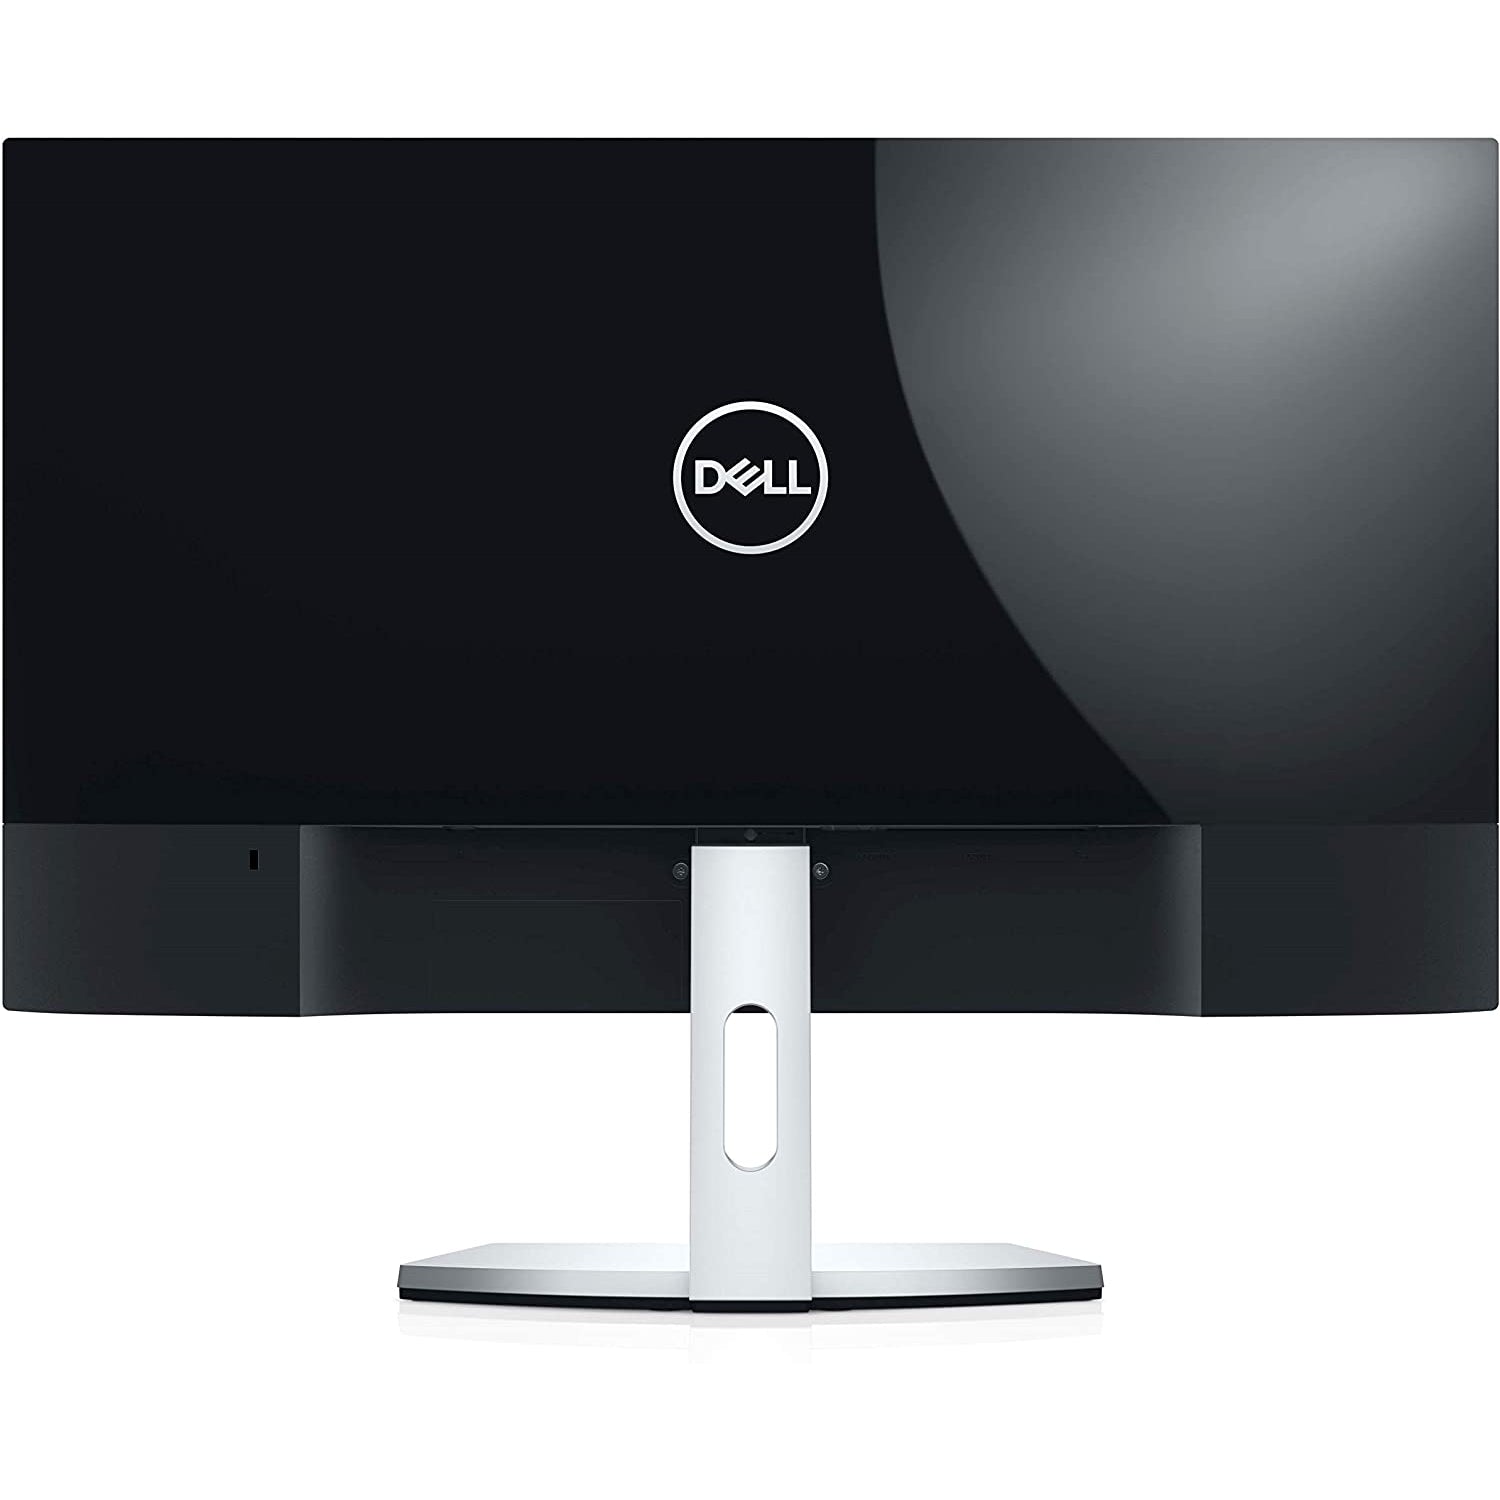 Dell S2419H 24 Inch Full HD (1920 x 1080) Monitor, 60 Hz, IPS, 5 ms, InfinityEdge Bezel